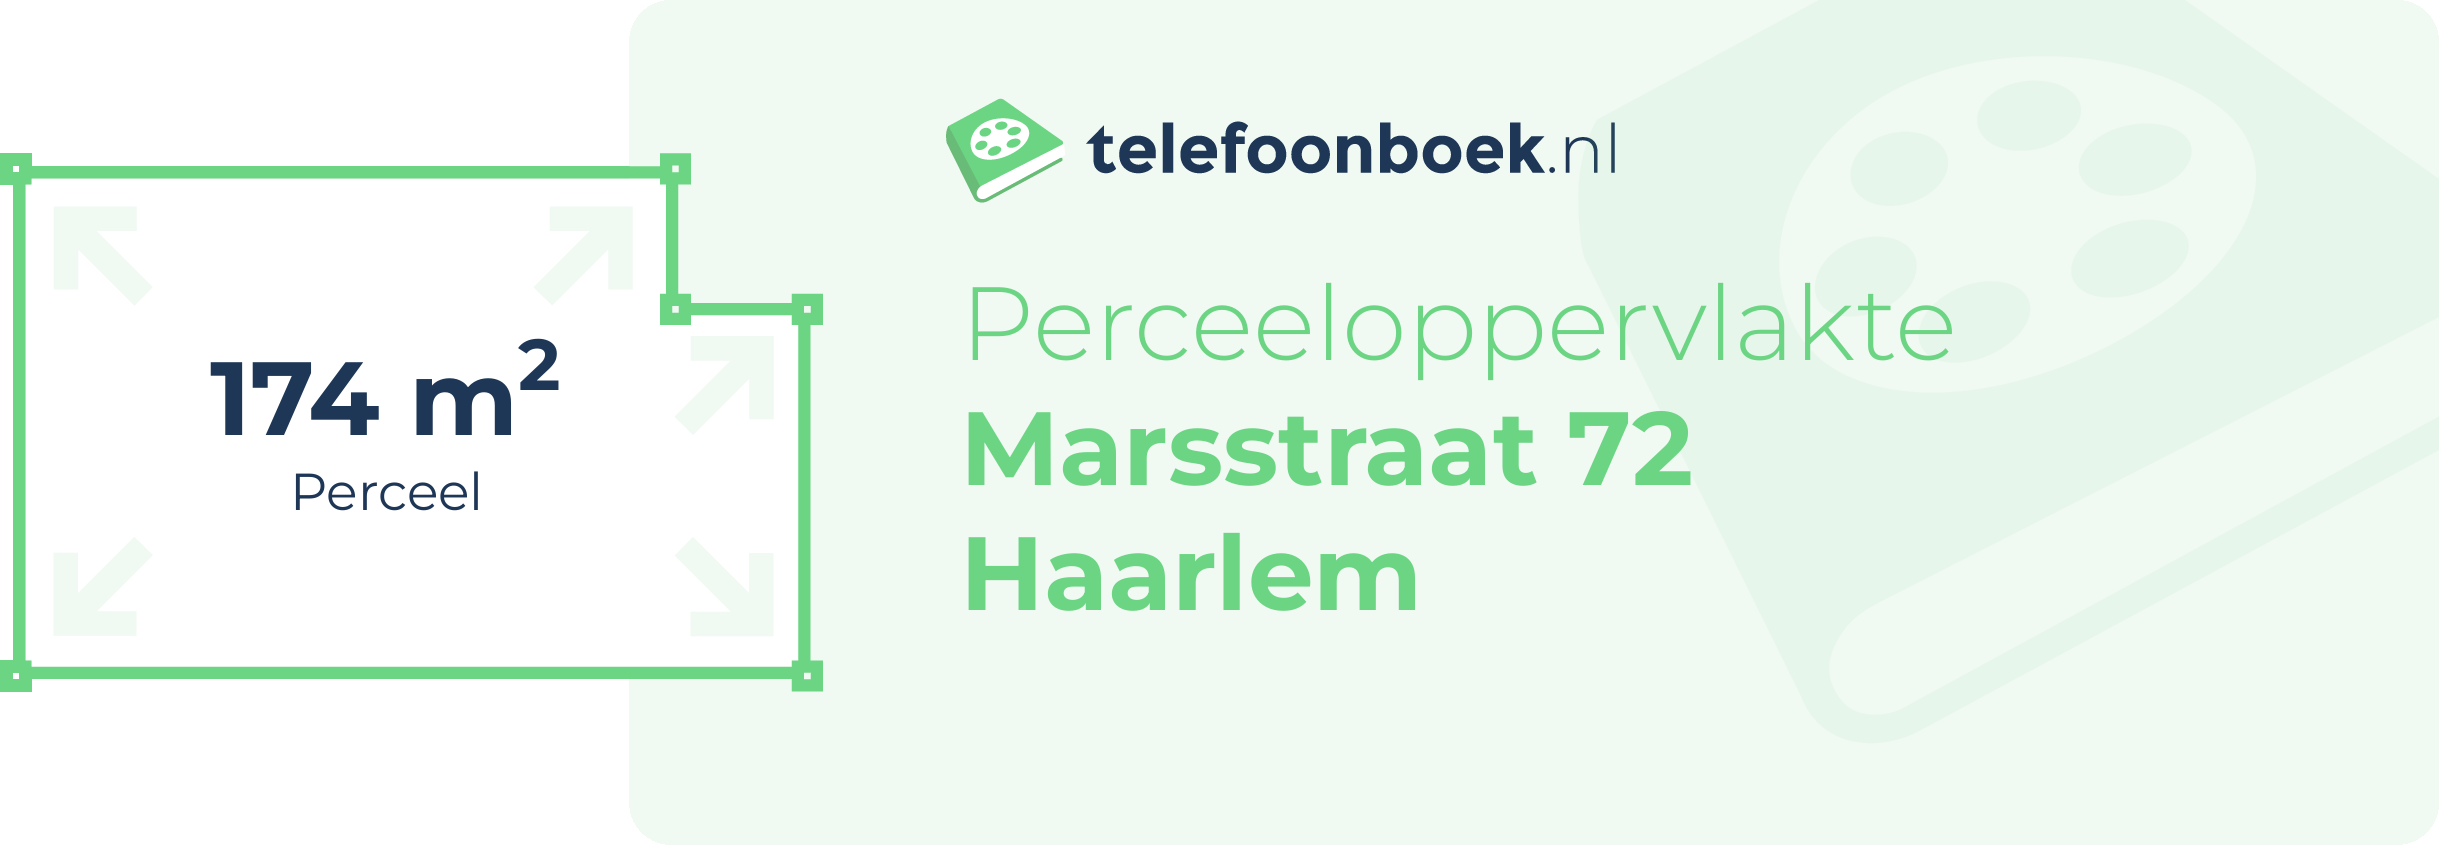 Perceeloppervlakte Marsstraat 72 Haarlem